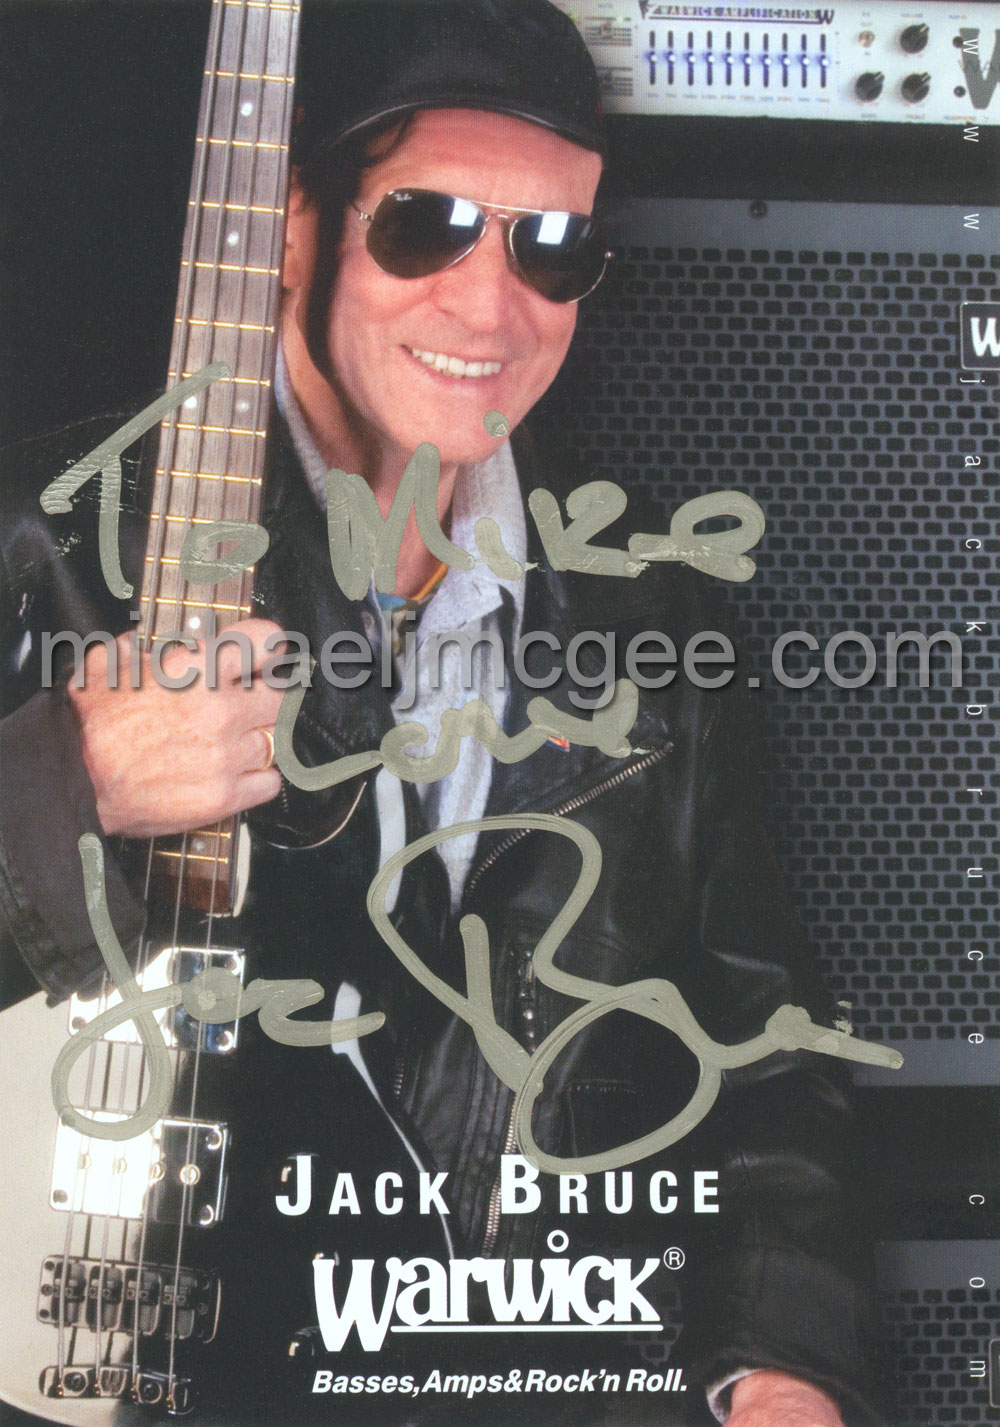 Jack Bruce / michaeljmcgee.com